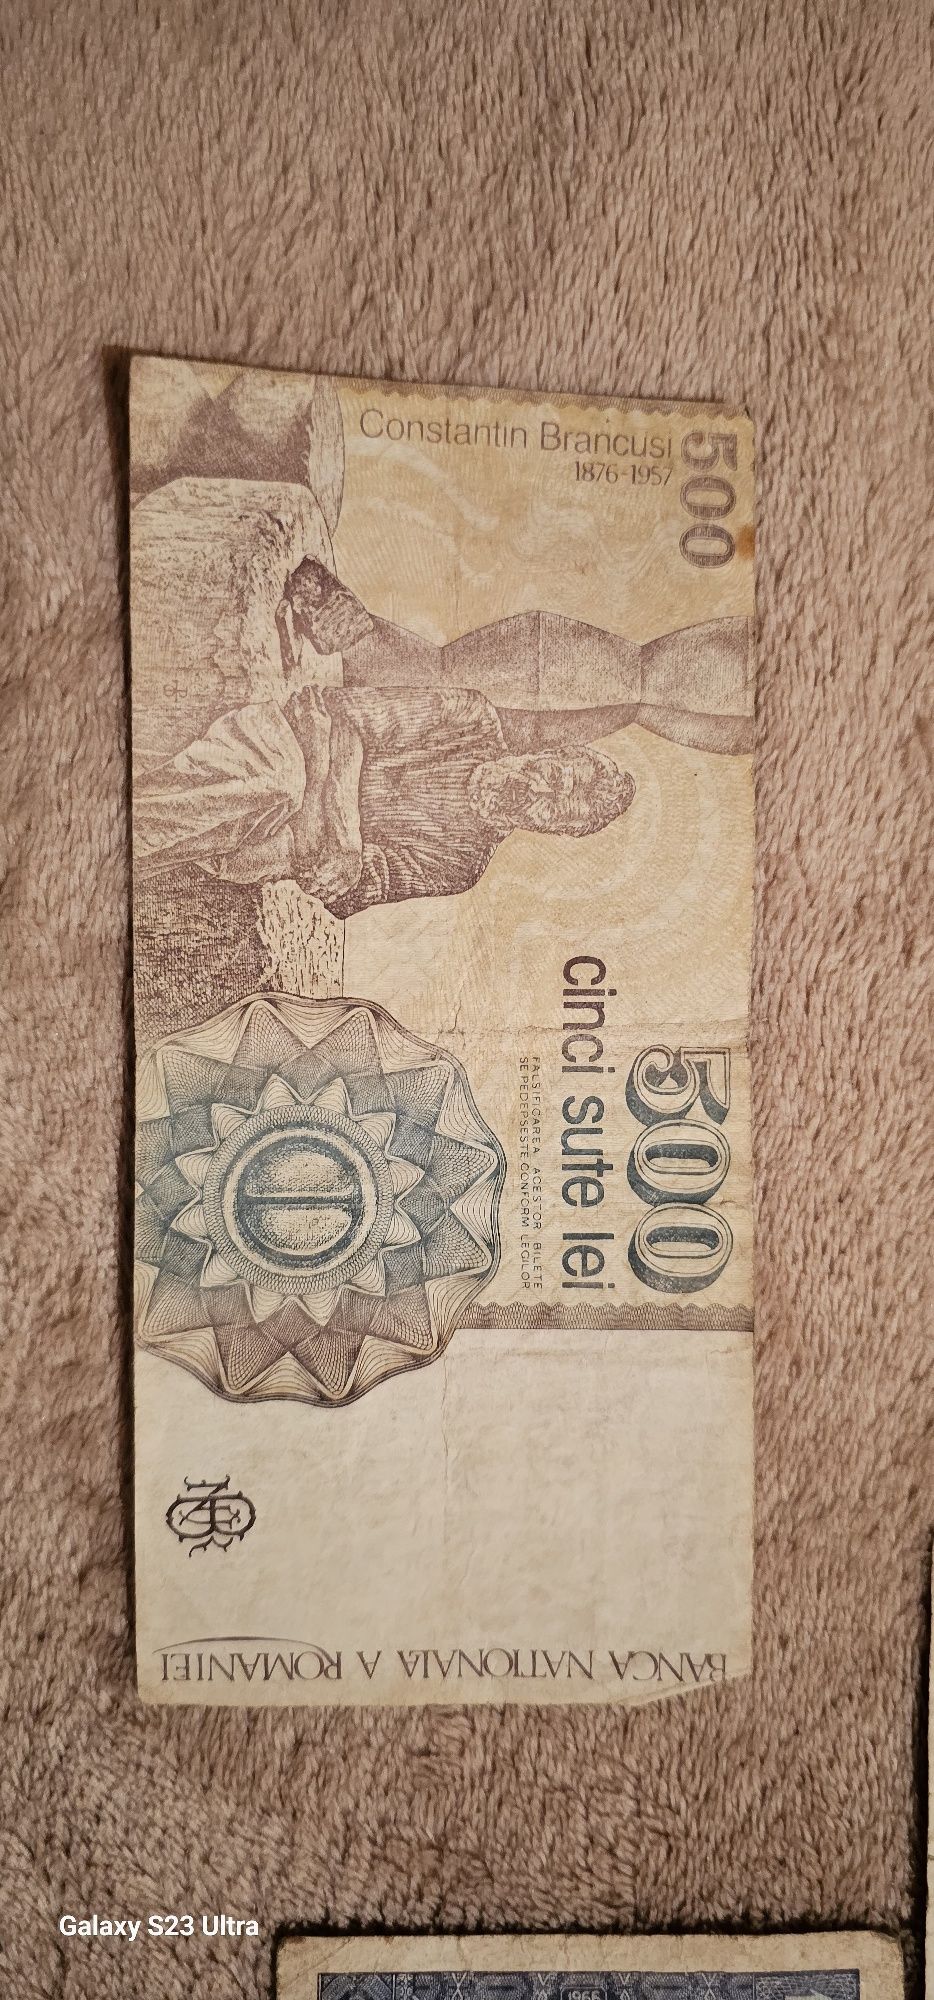 Bancnote vechi și monezi foarte rare